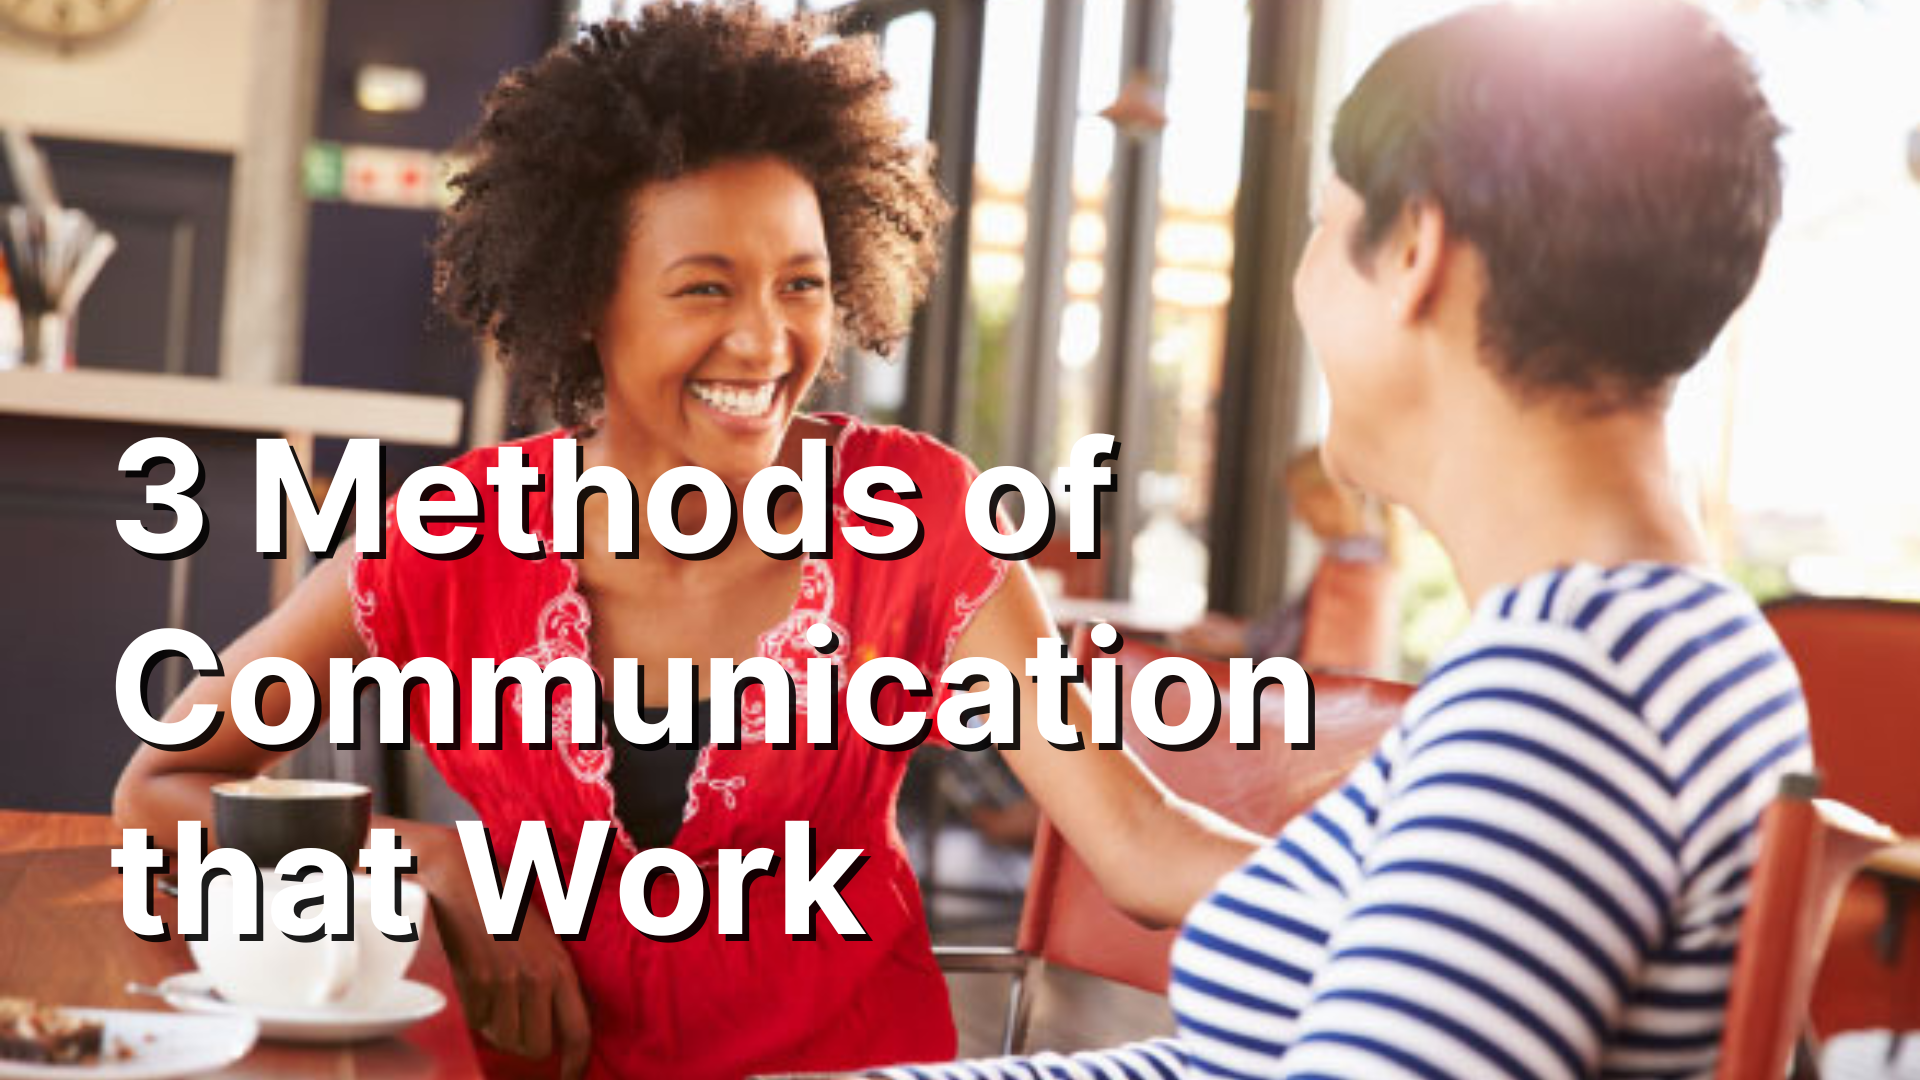 3 Methods of Communication that Work